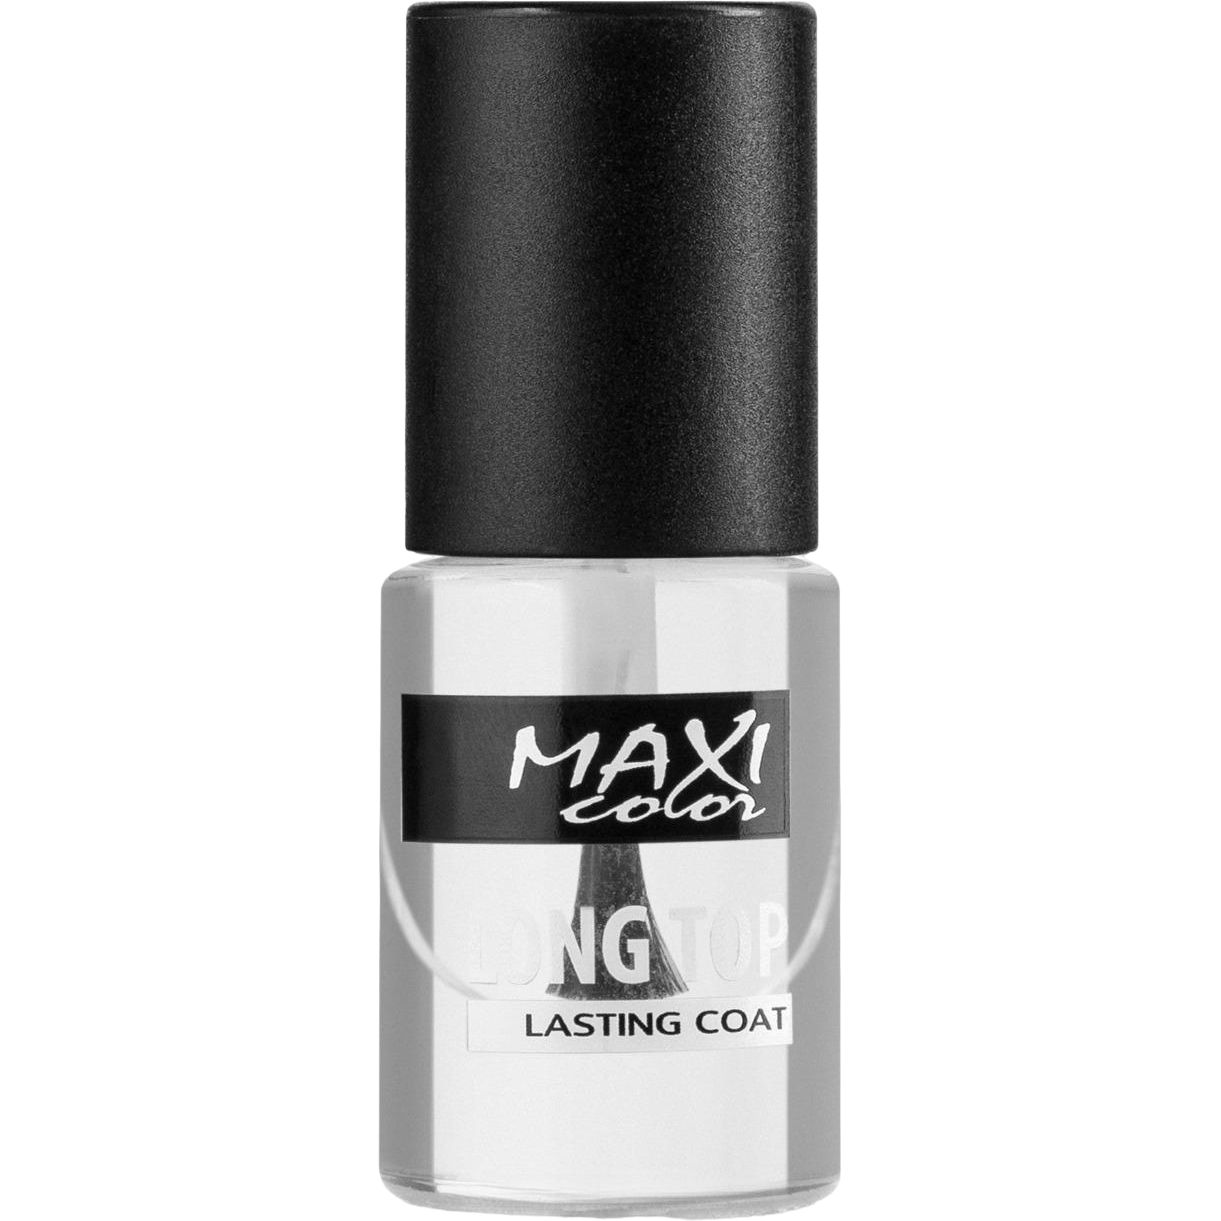 Закрепитель лака Maxi Color Long Top №104, 6 мл - фото 1